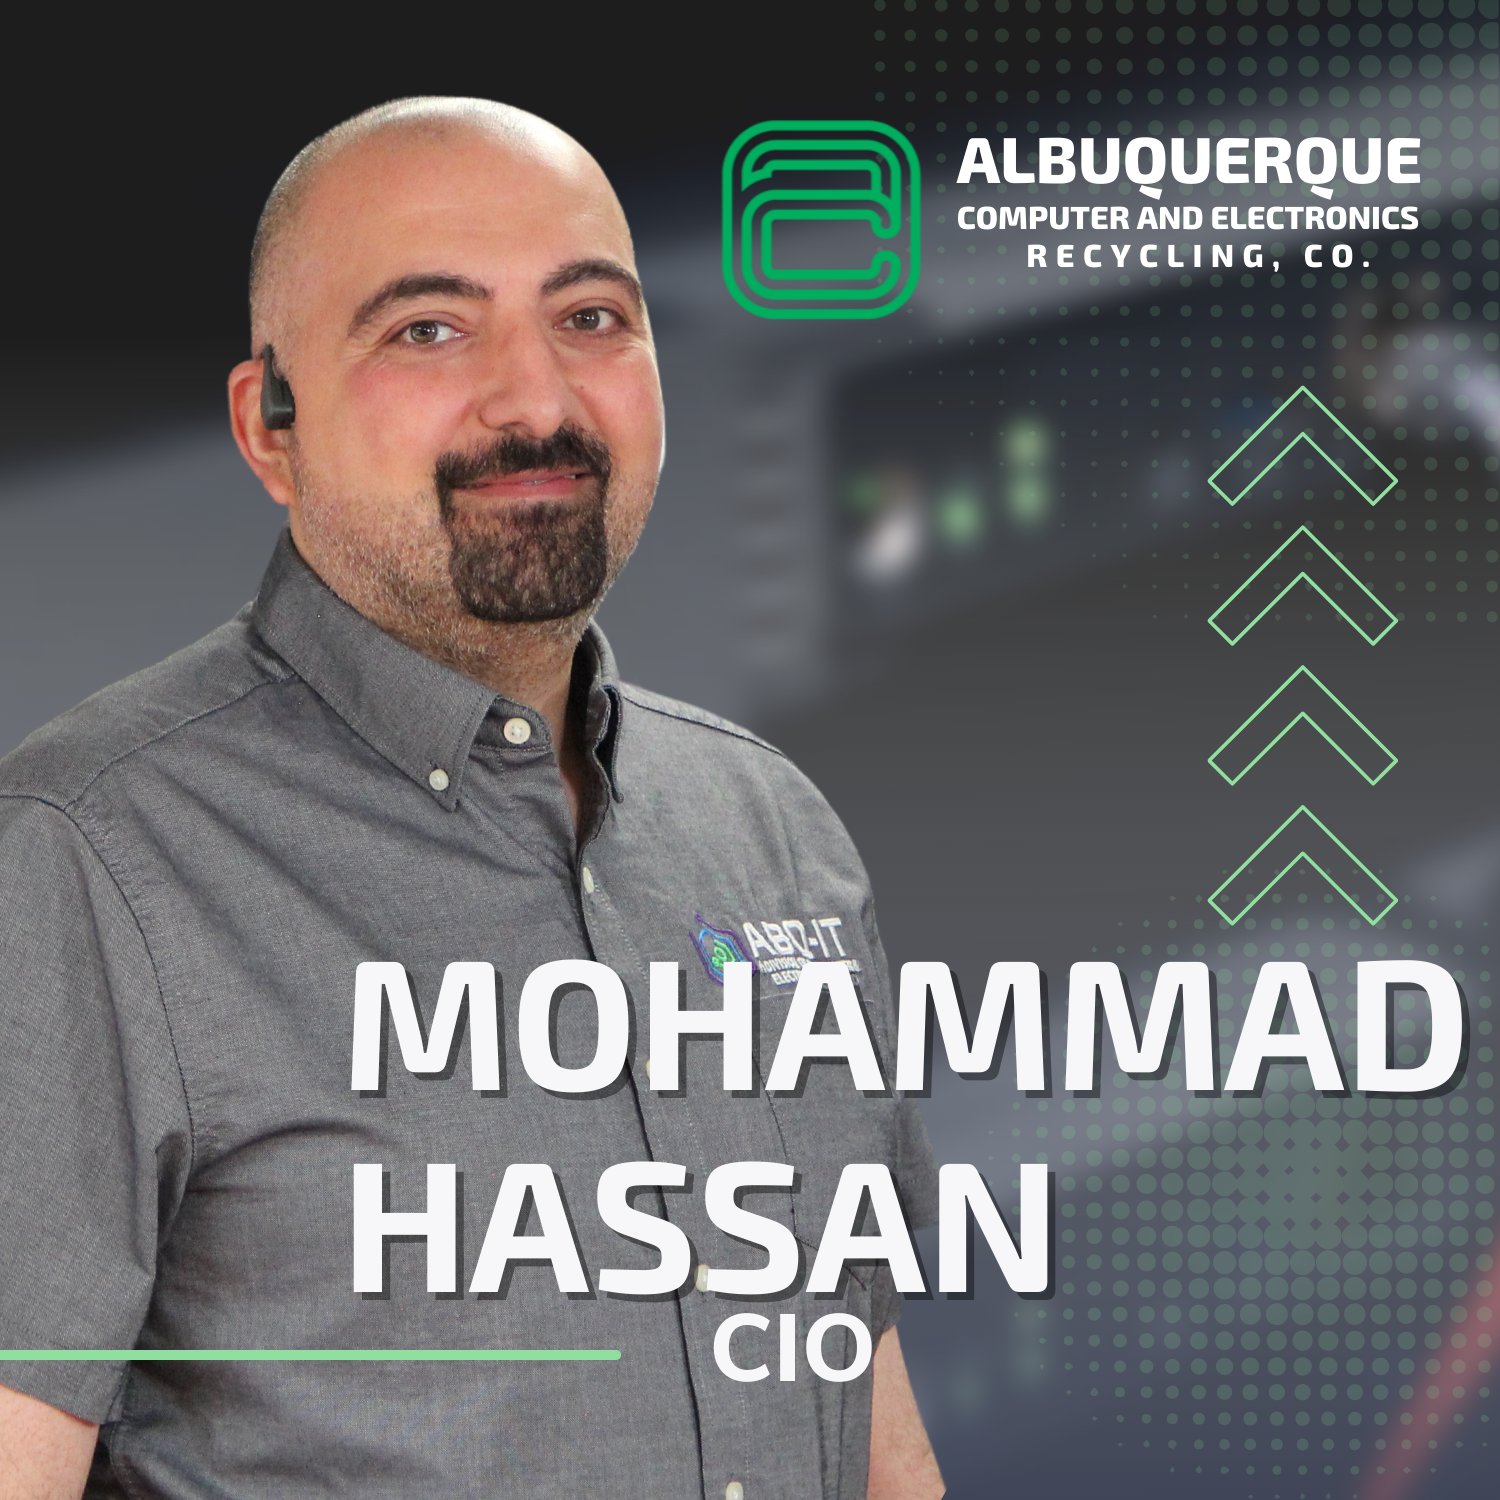 Mohammad Hassan - ABQ-IT Profile Image